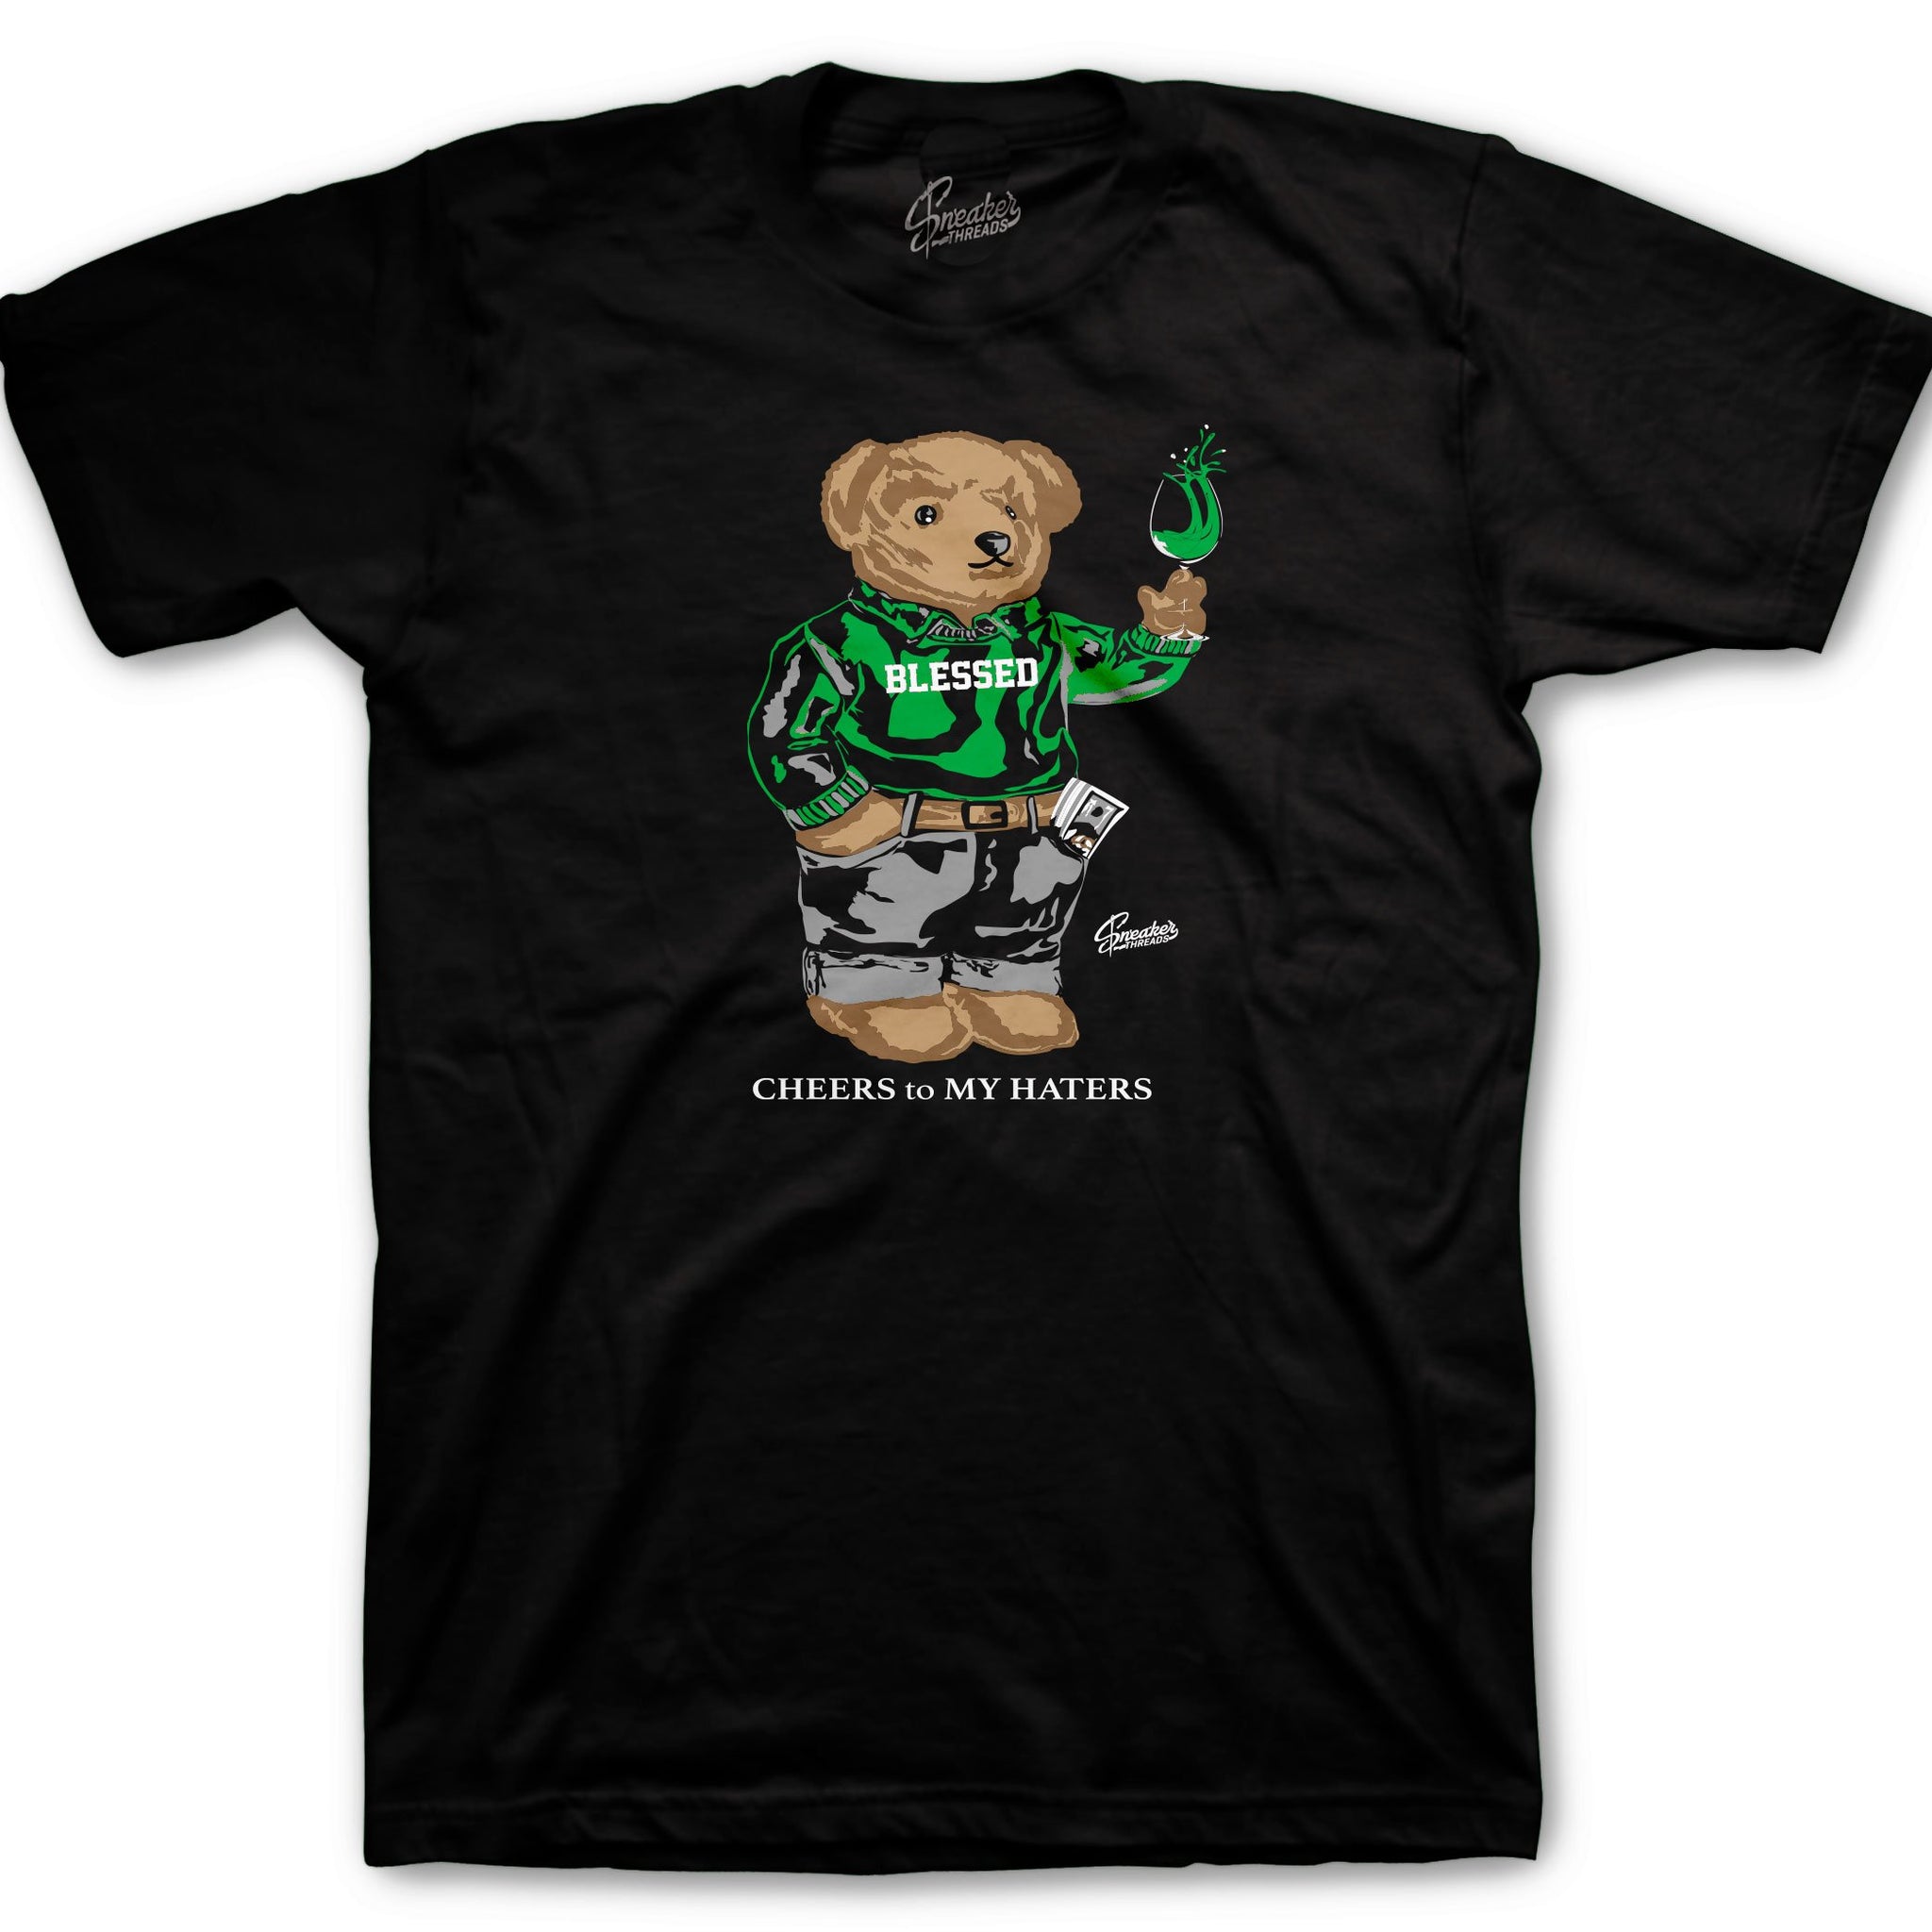 Pine Green Jordan 1 Retro sneaker collection has matching t shirt collection 